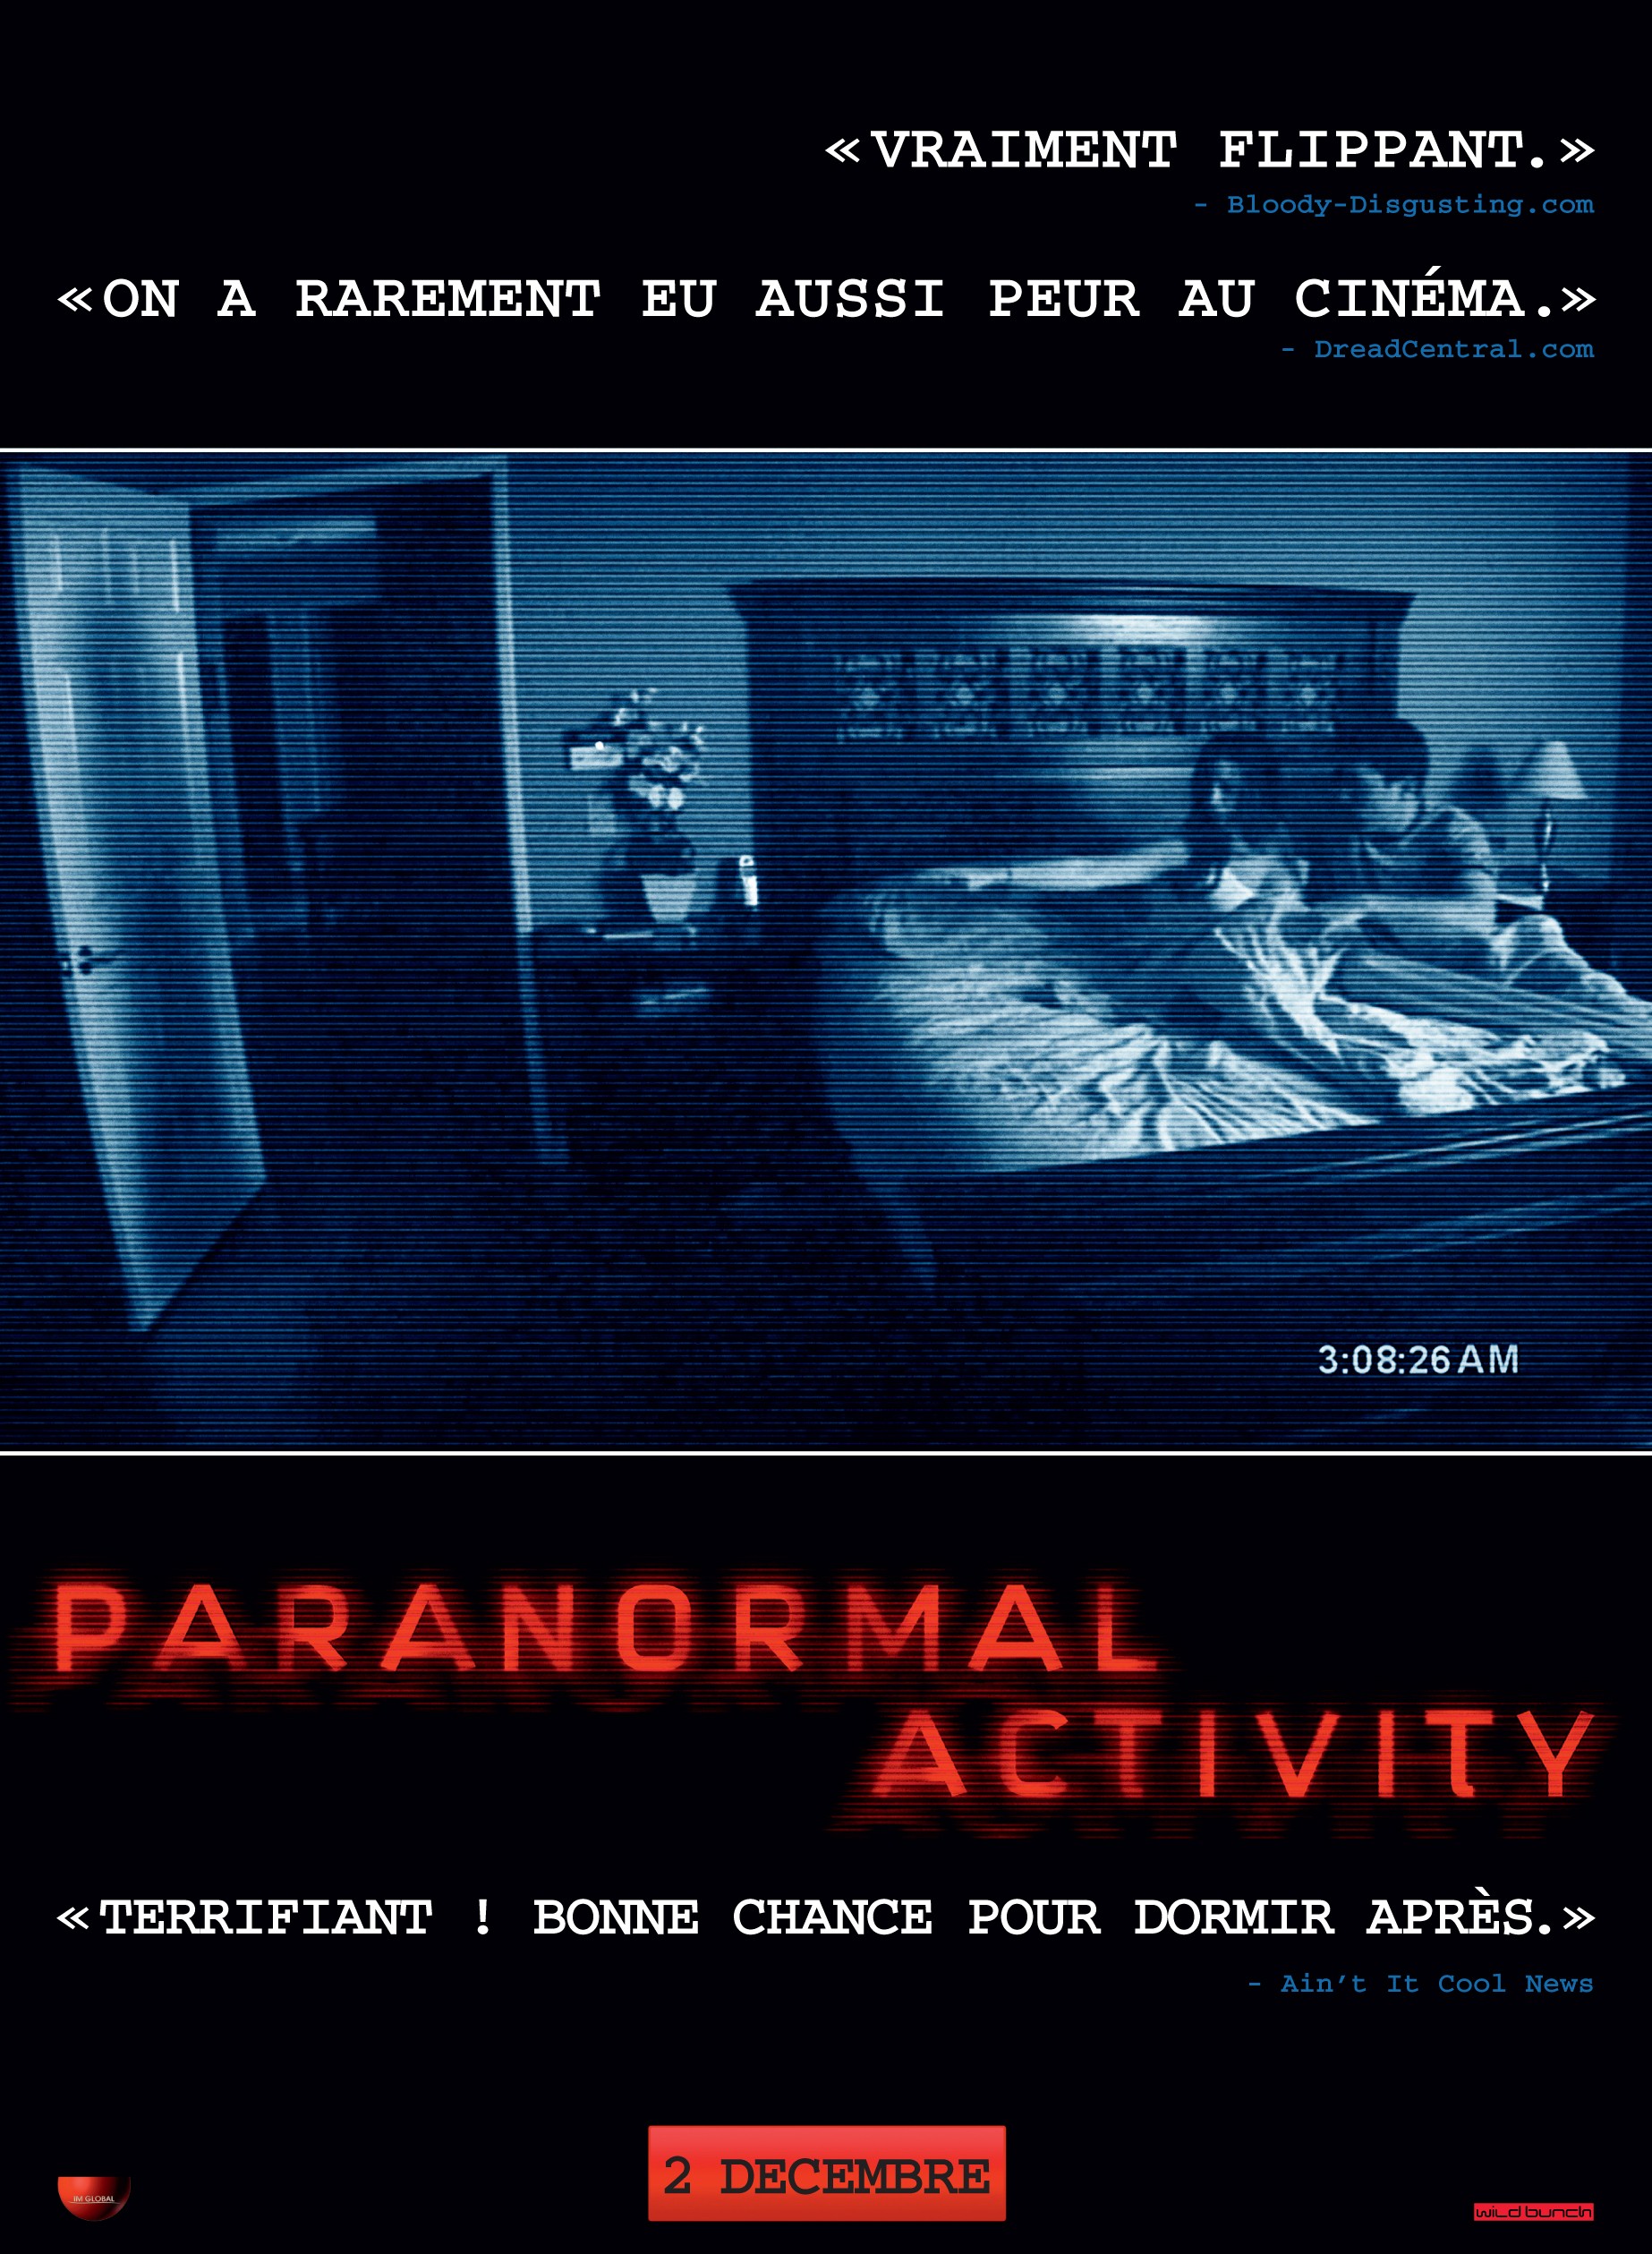 paranormal 3 activity streaming